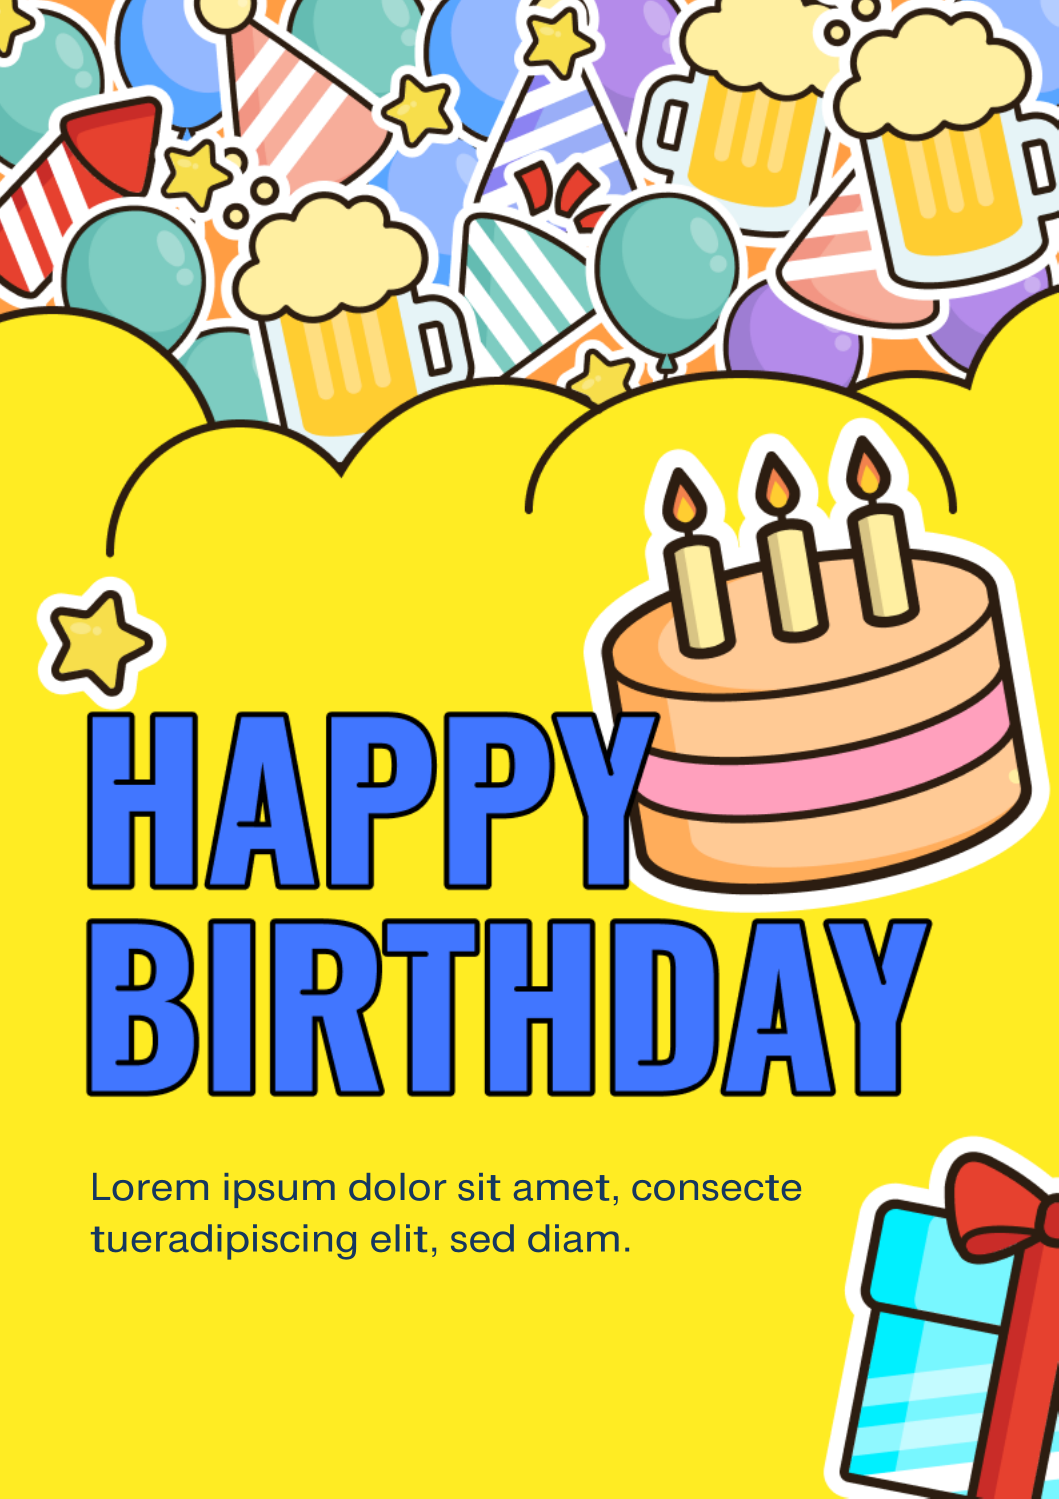 Birthday wishes card for boyfriend 1